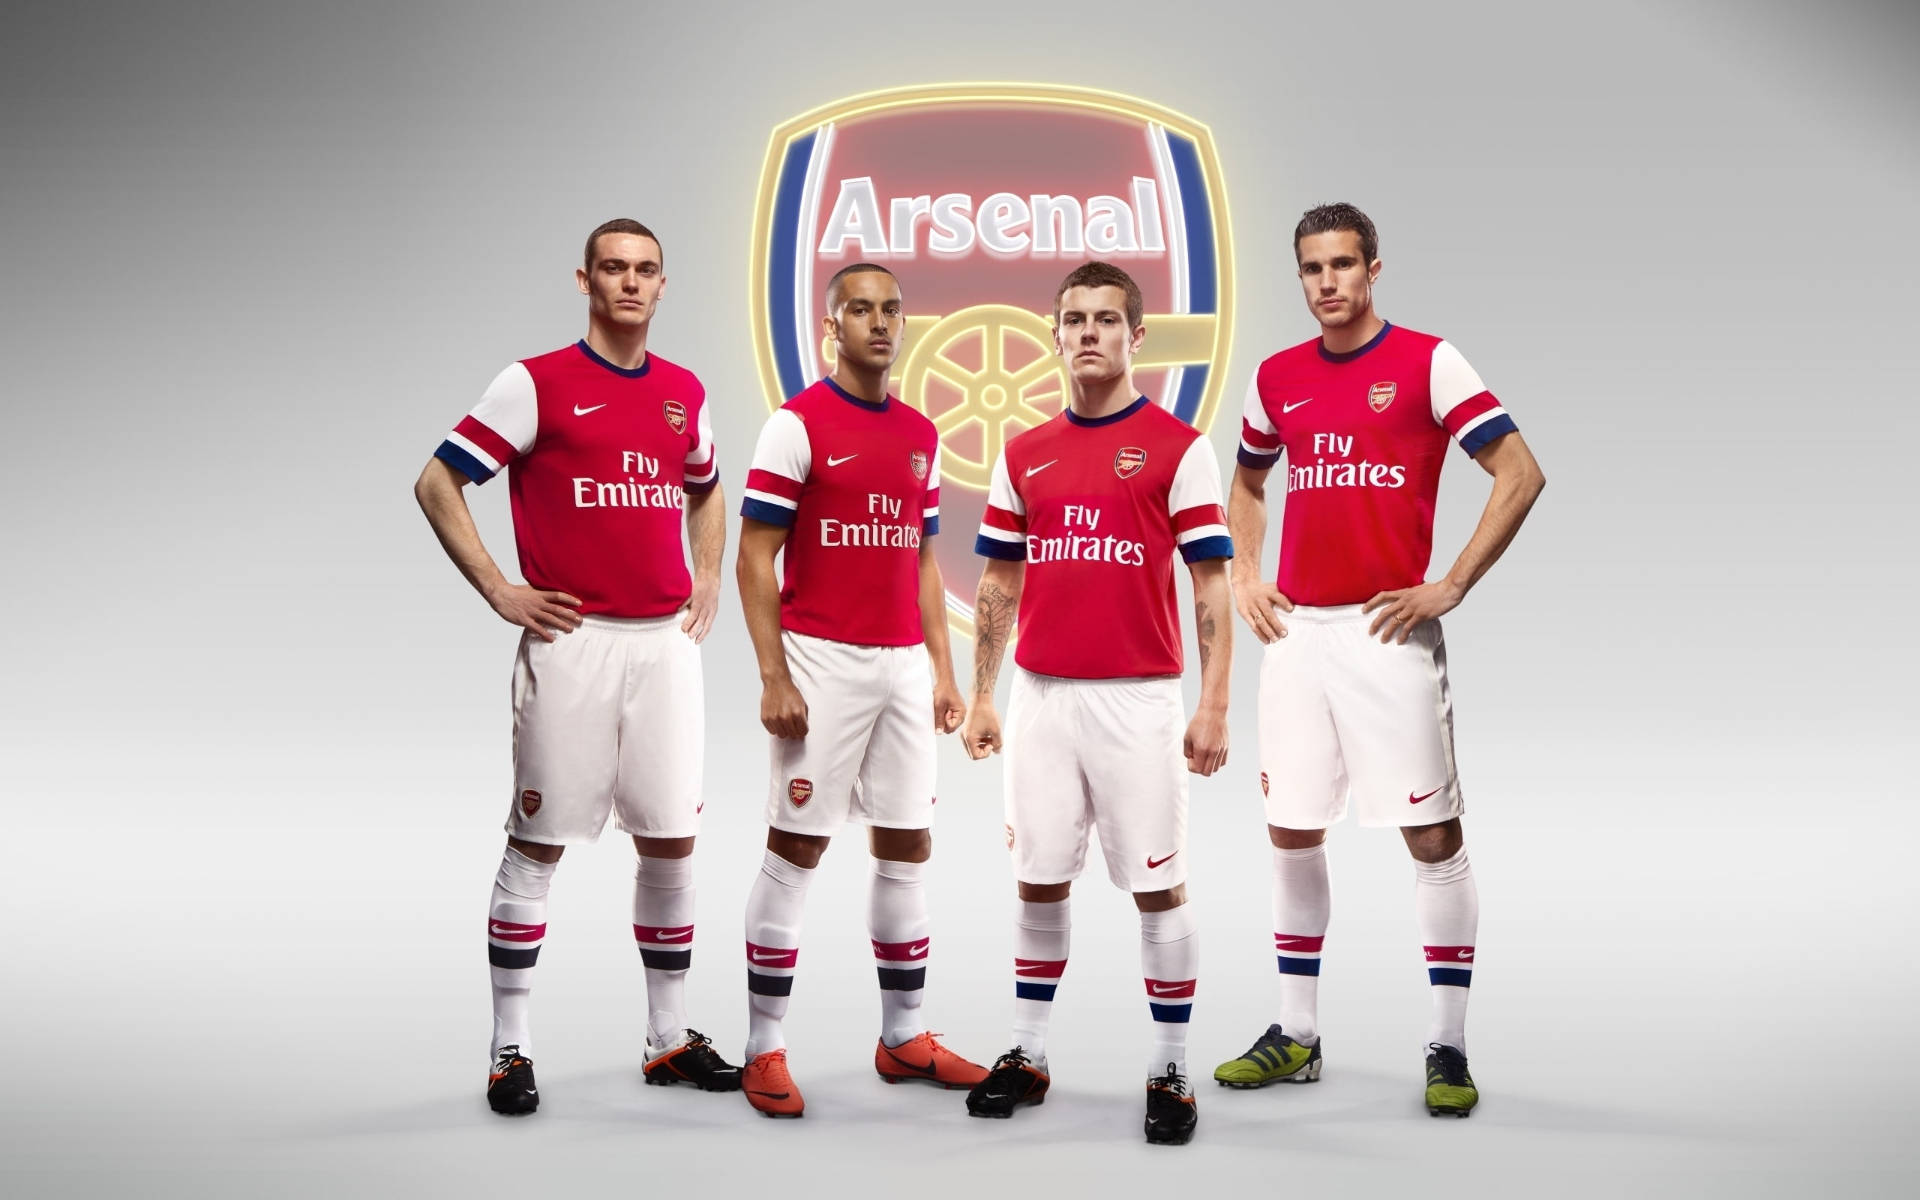 Arsenal Logo And Players